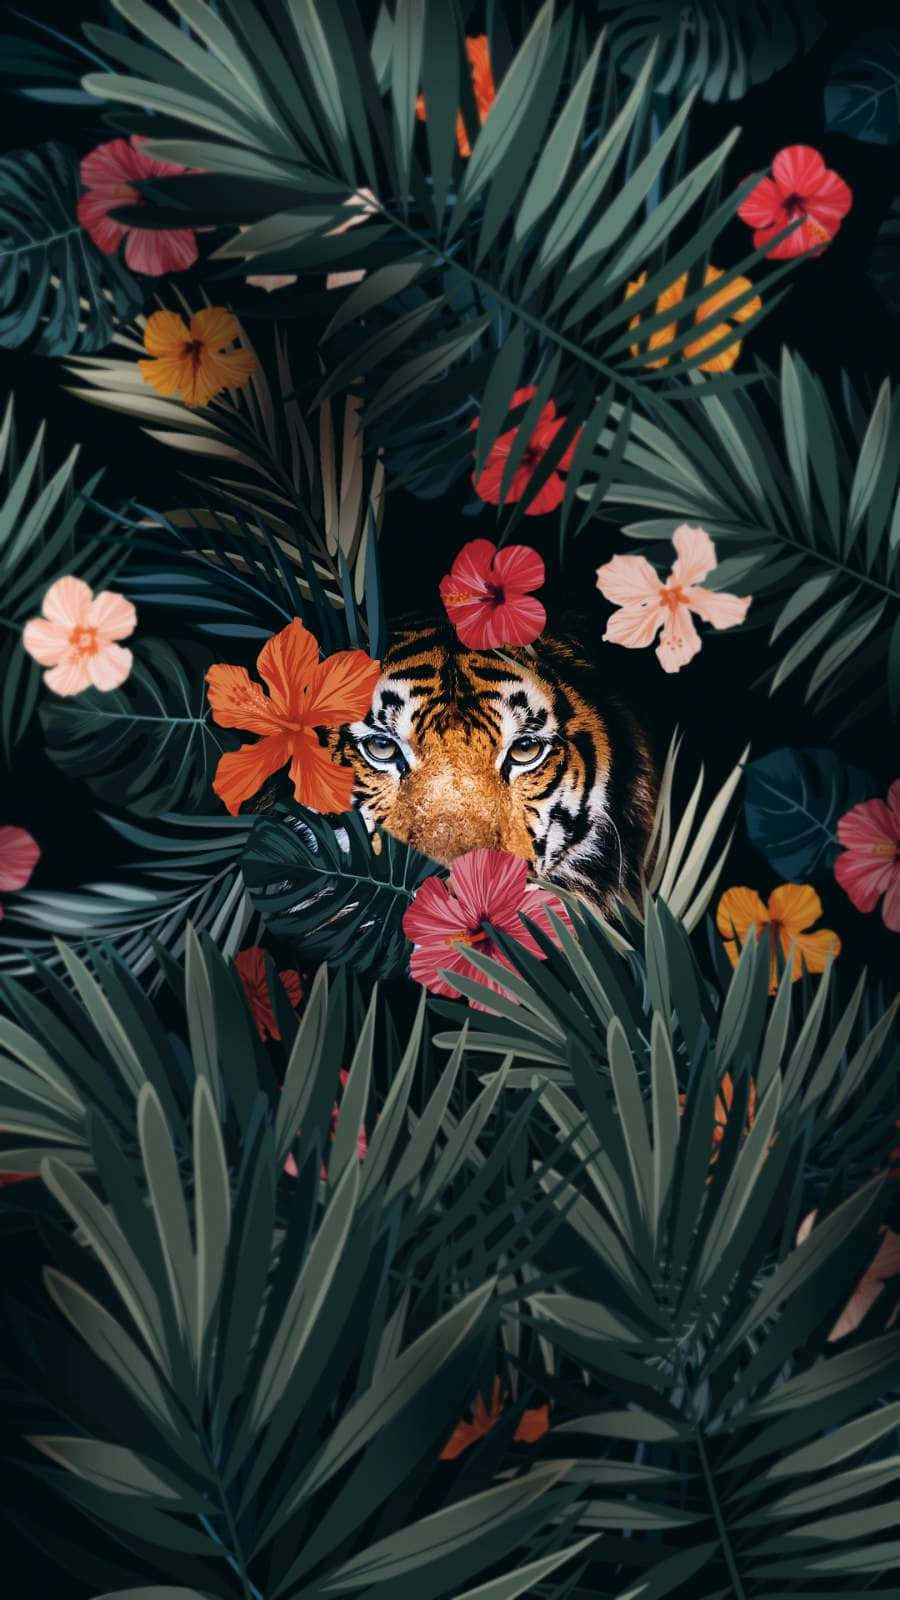 Tiger In Floral Jungle Aesthetic.jpg Wallpaper